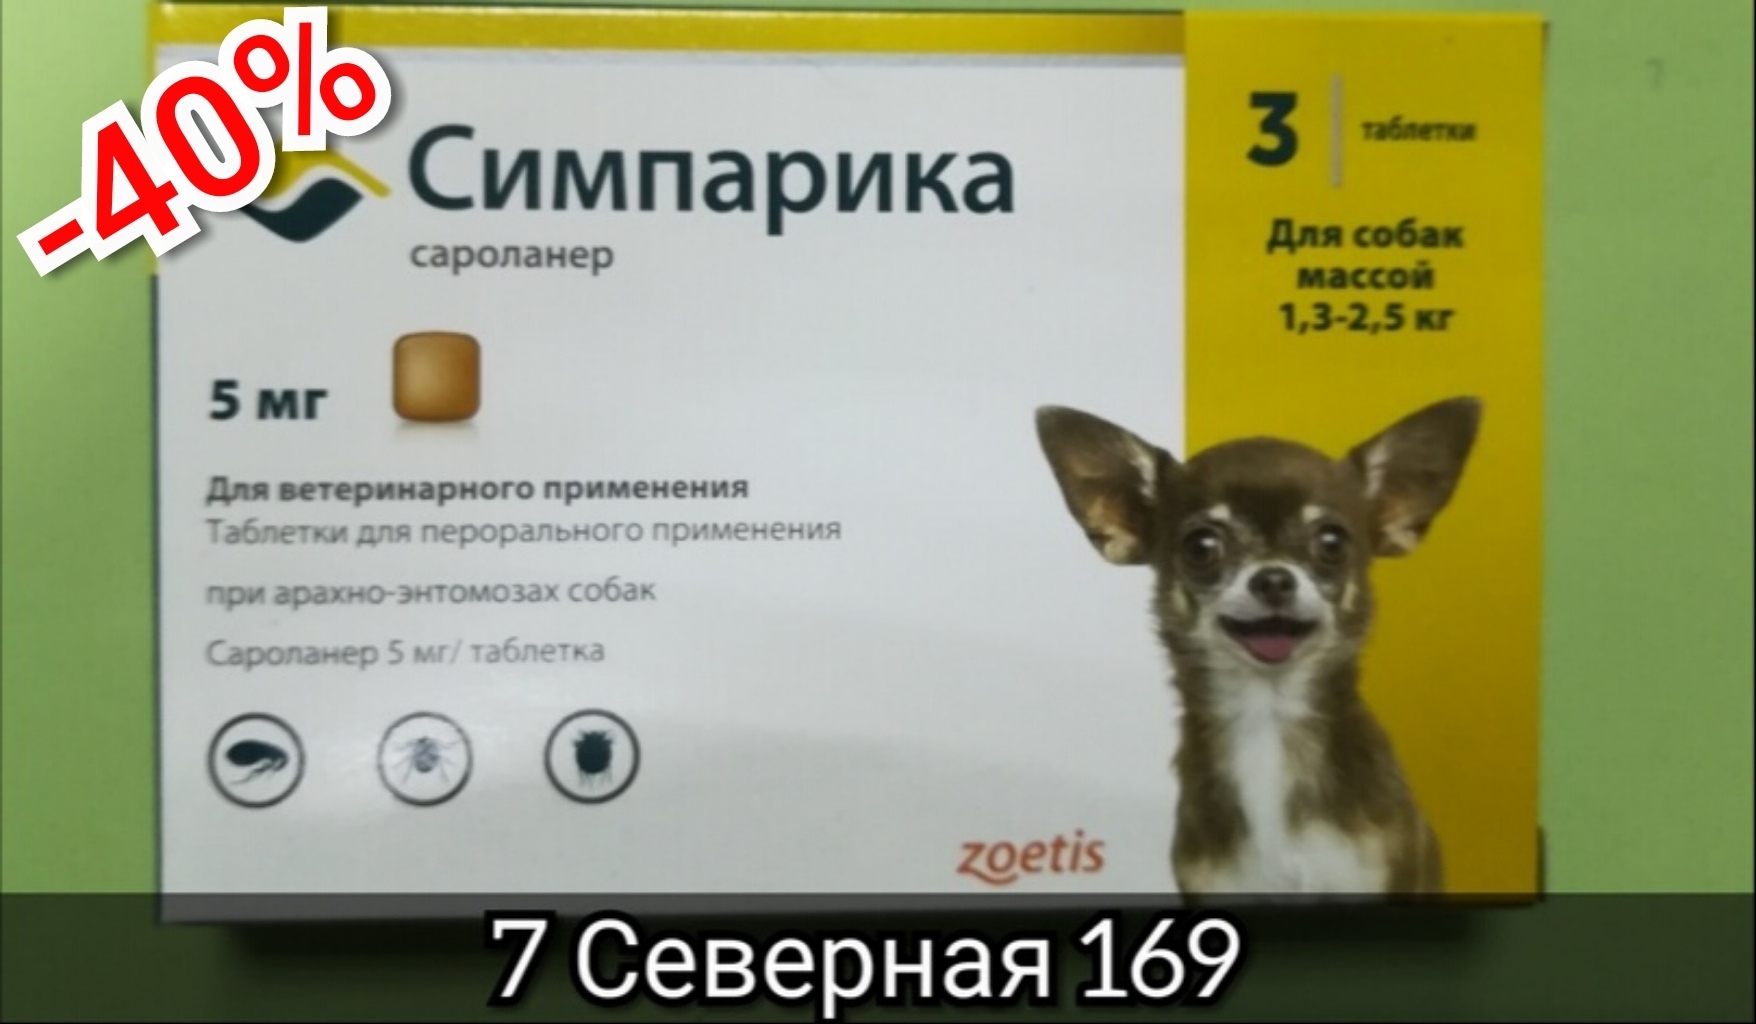 Симпарика для собак купить в красноярске. Симпарика для собак 7 кг.